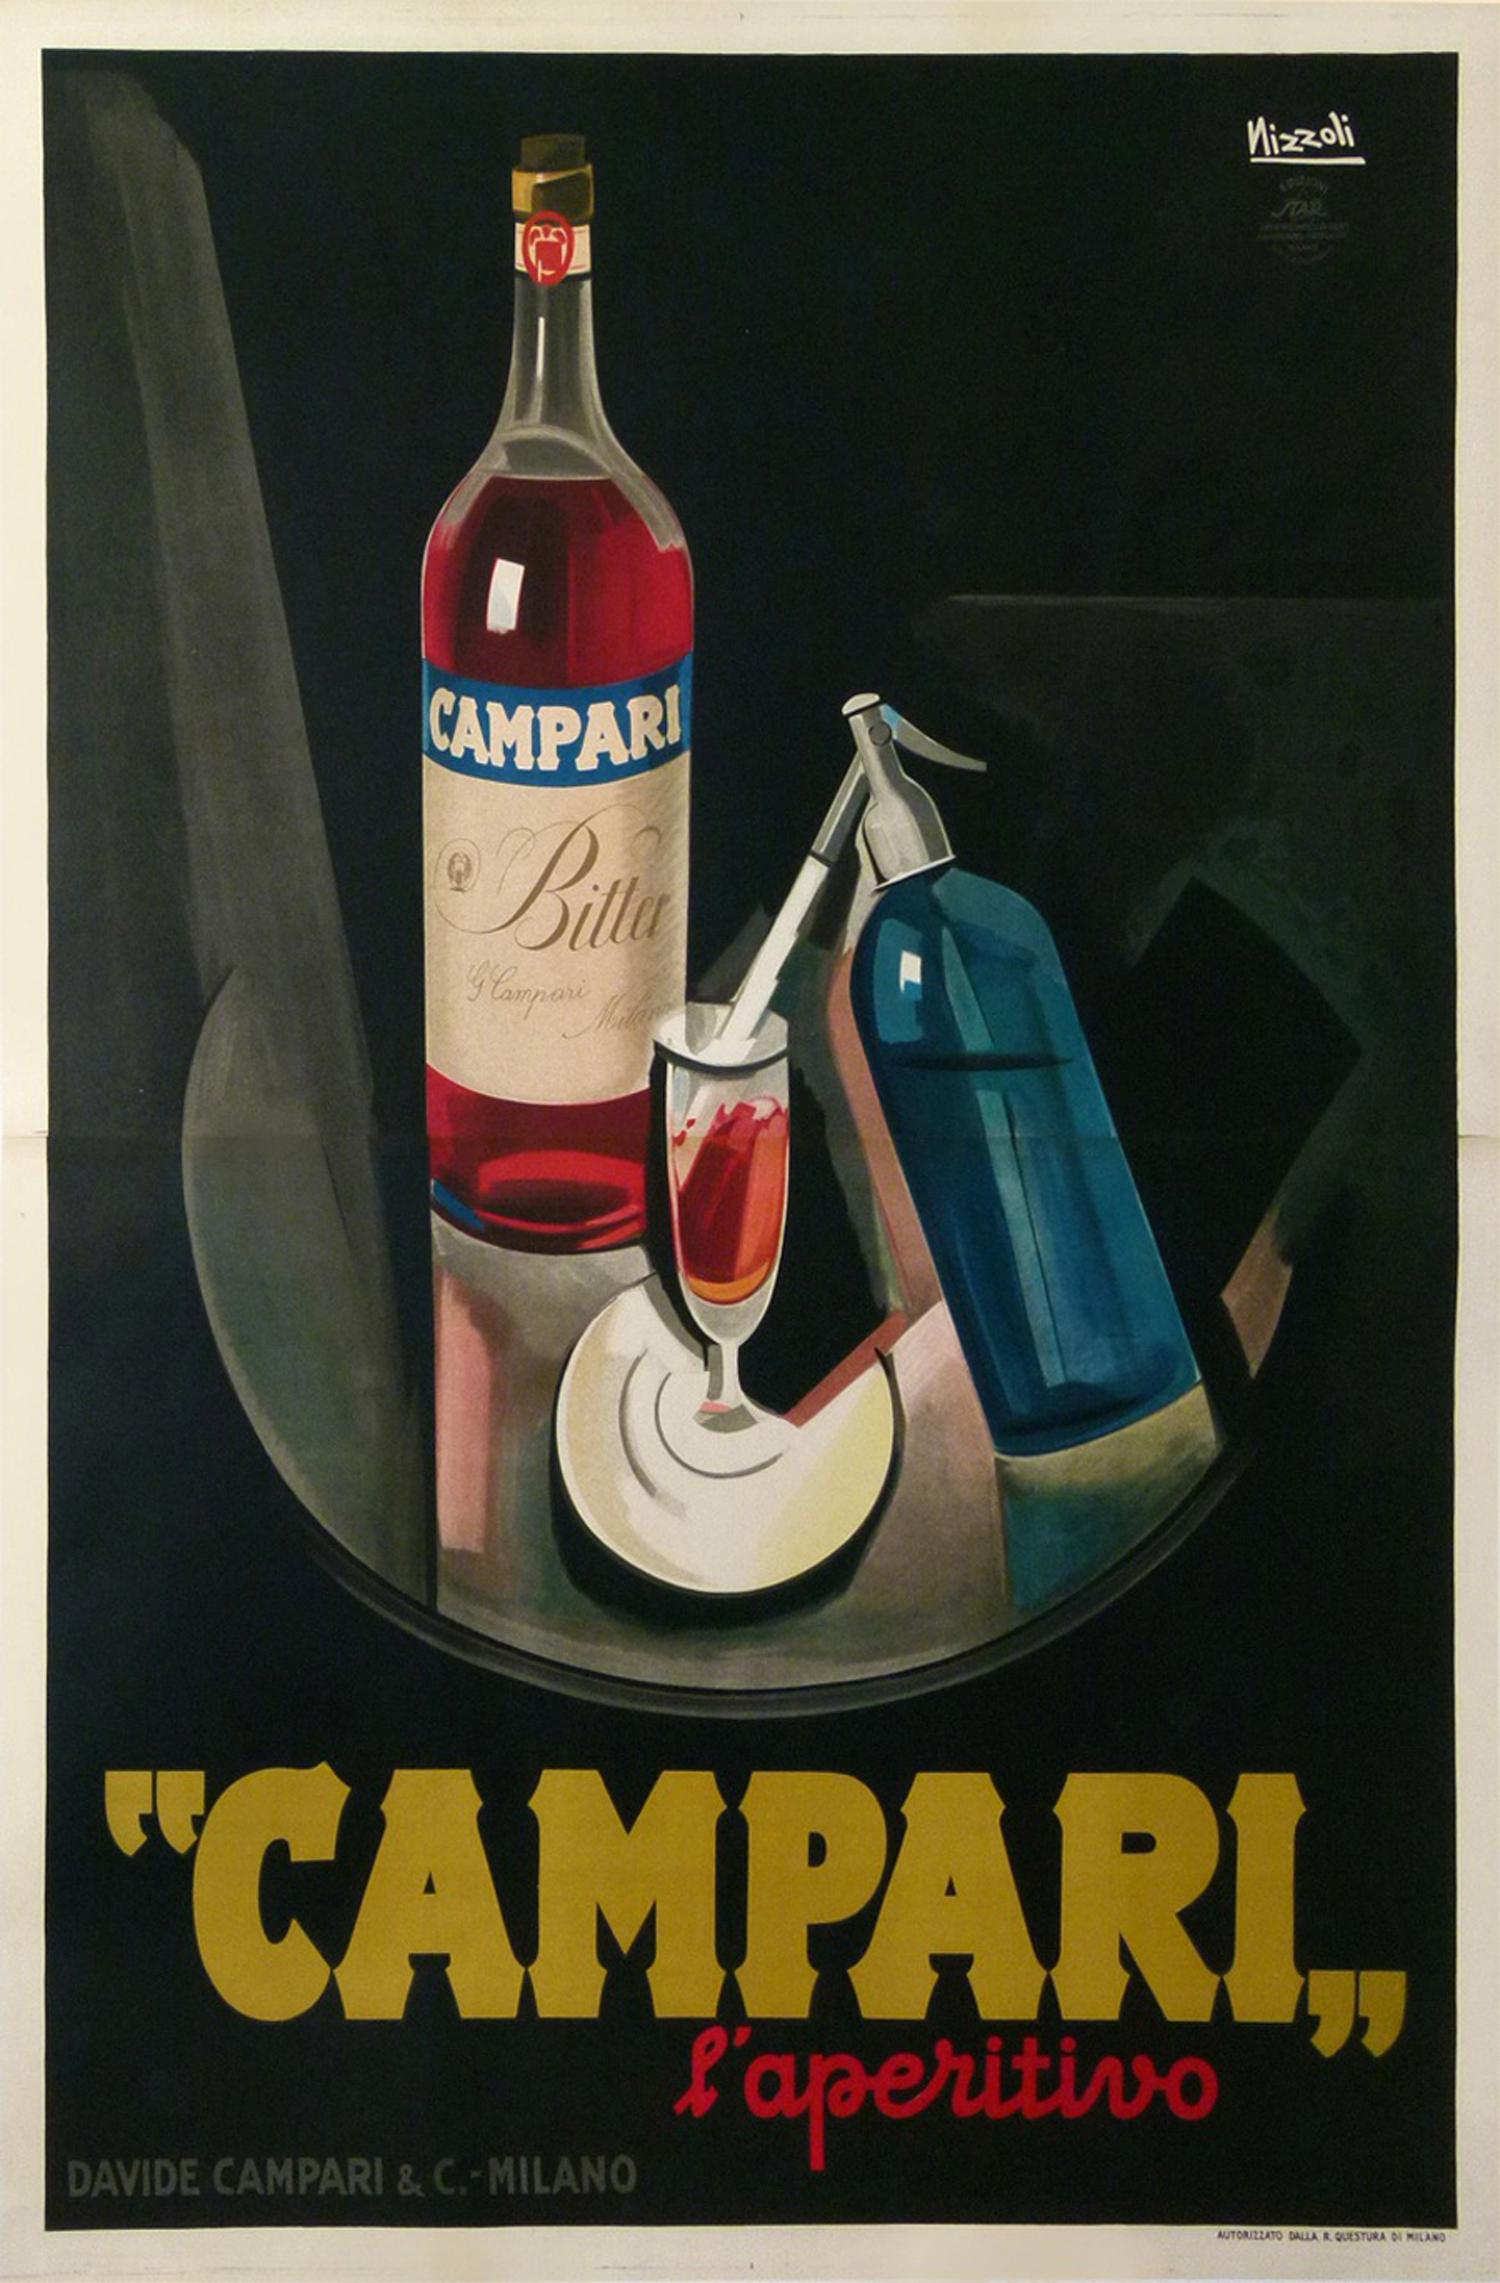 Original Vintage Italian Campari Poster by Nizzoli 1926 Large Format - Print by Marcello Nizzoli